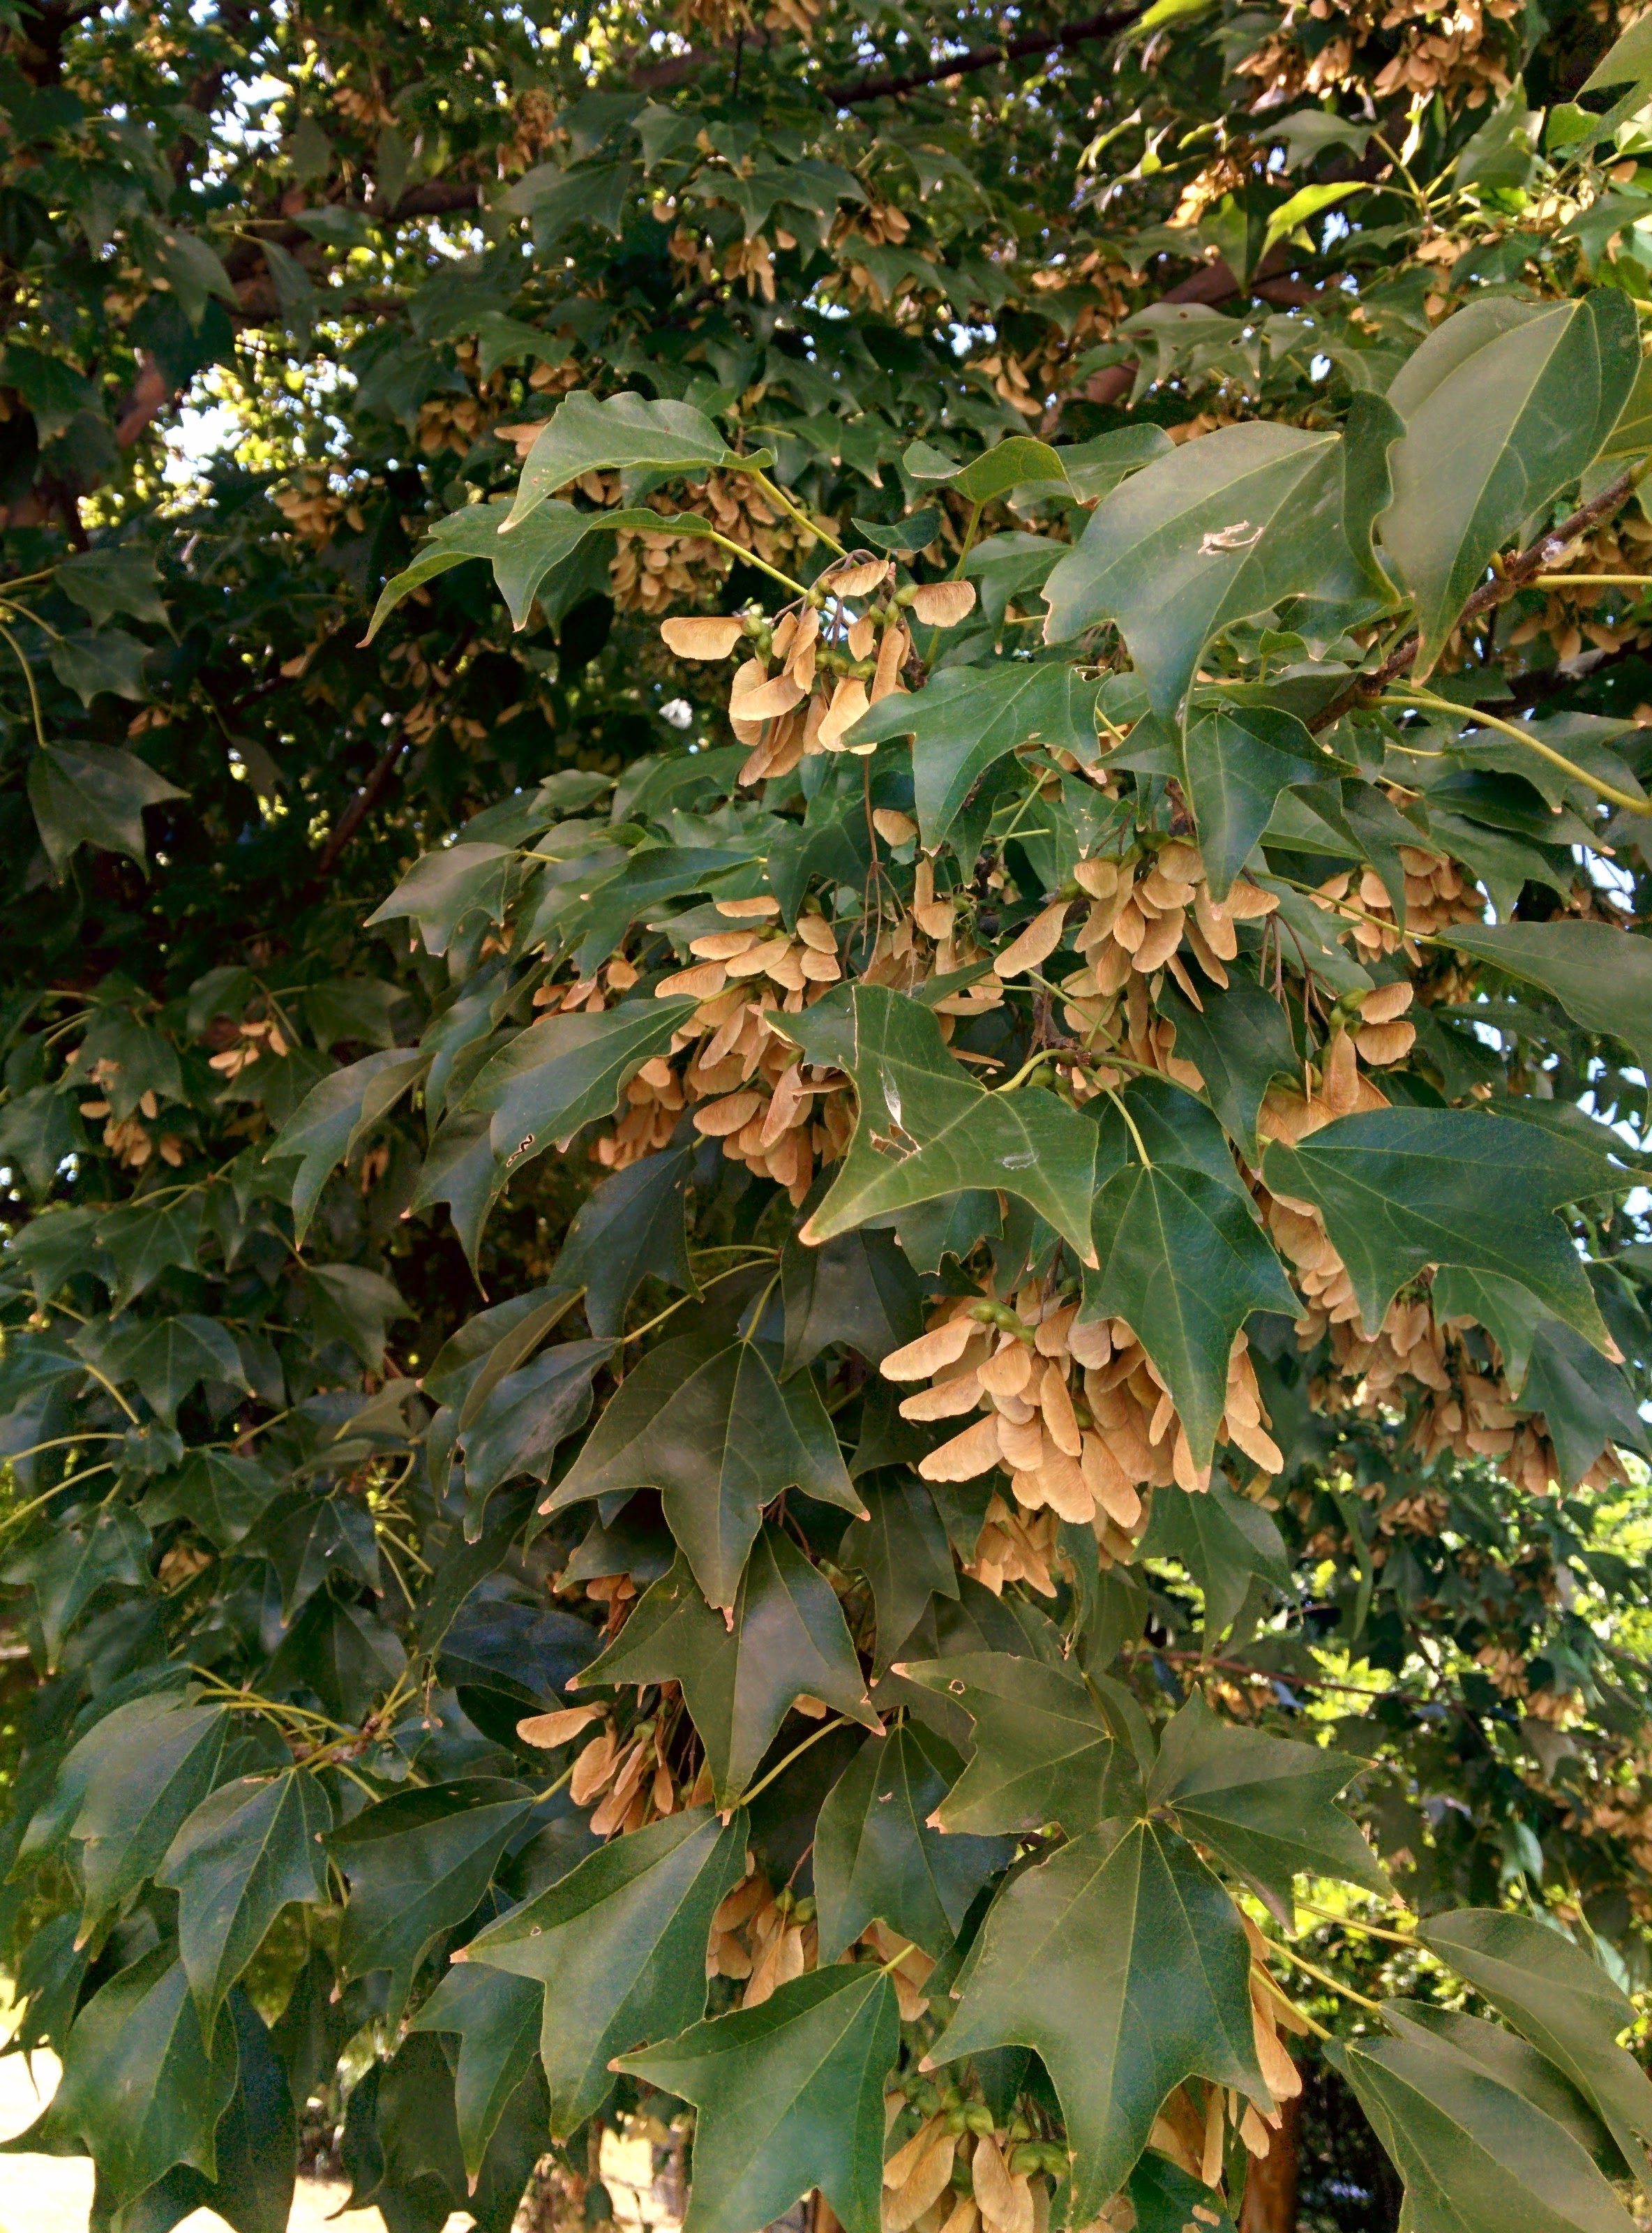 IMG_20150922_153115.jpg 여덟 팔자 날개열매(시과)를 주렁주렁 매단 중국단풍나무